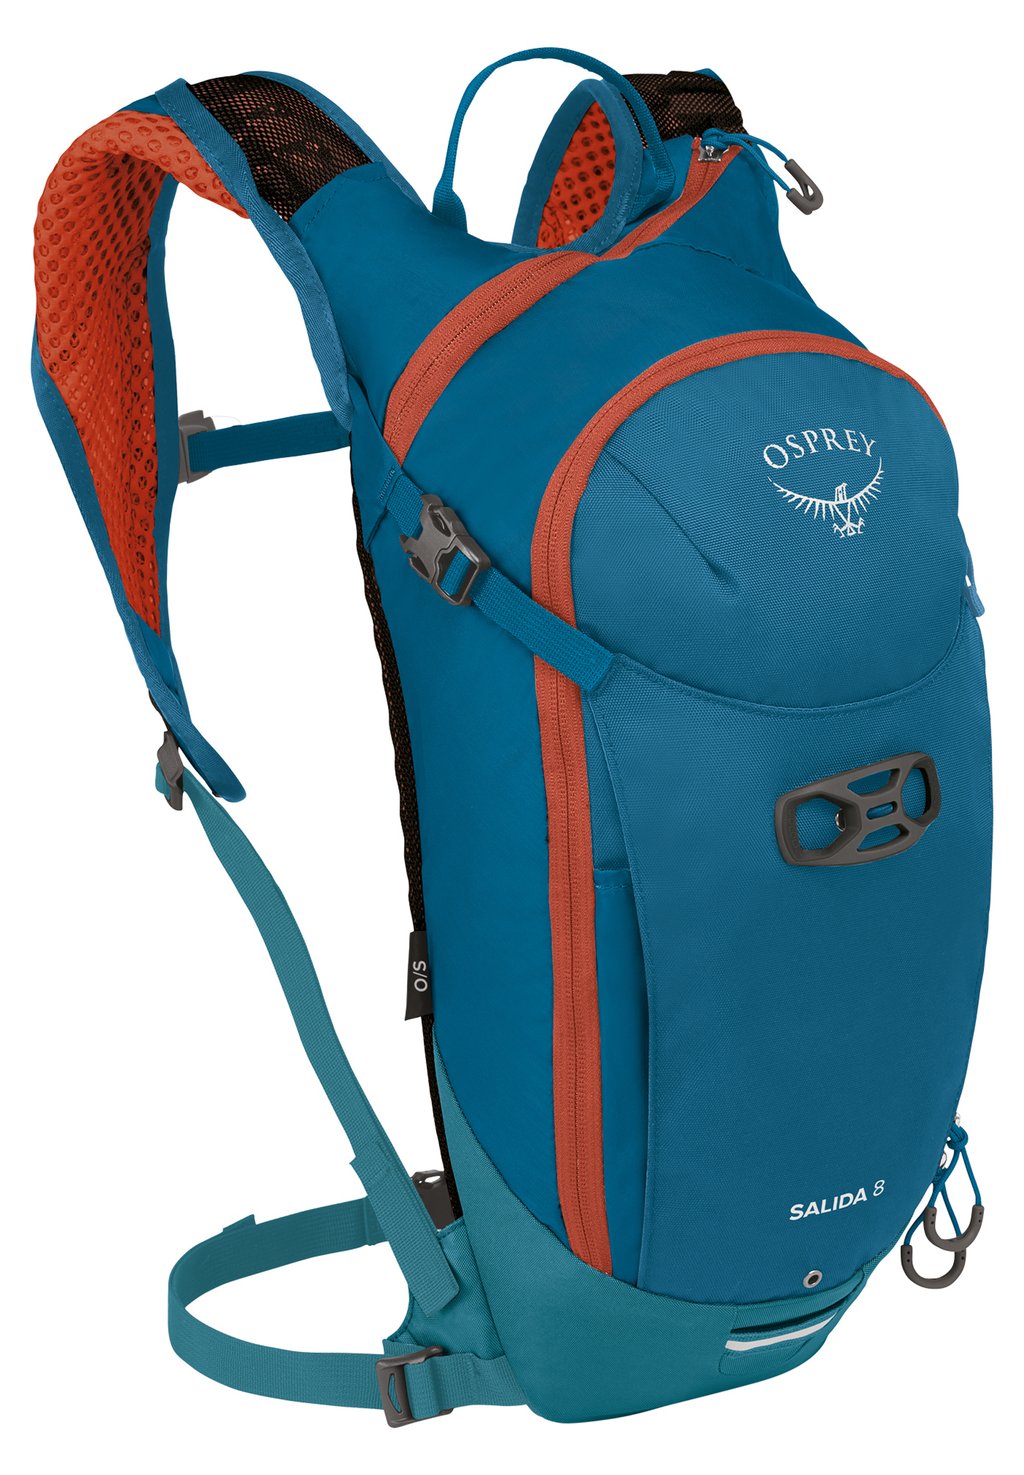 Туристический рюкзак SALIDA 8 Osprey, цвет waterfront blue